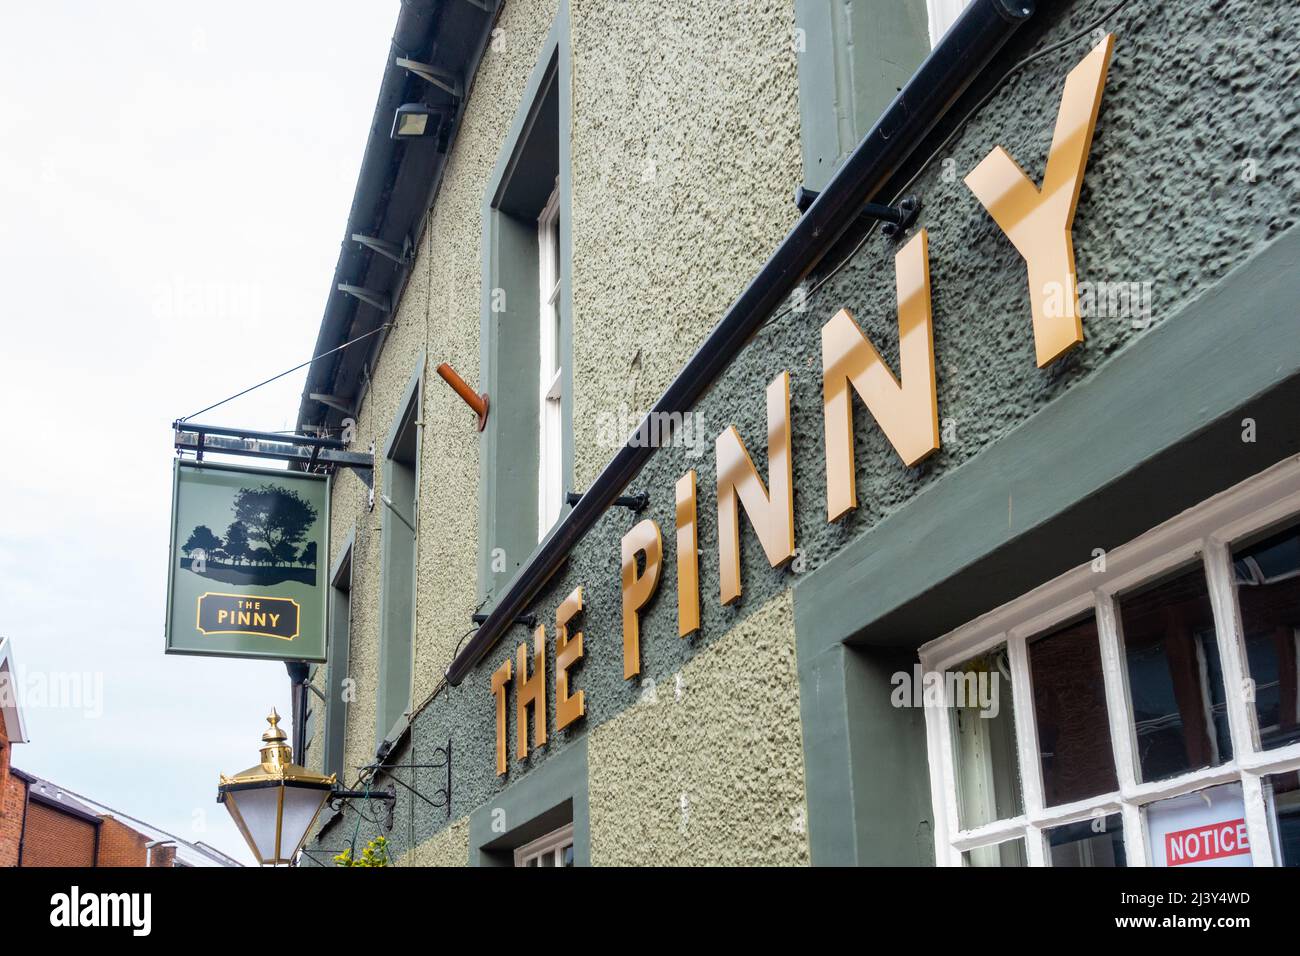 The Pinny, ein Pub in Penrith, Cumbria, Großbritannien Stockfoto